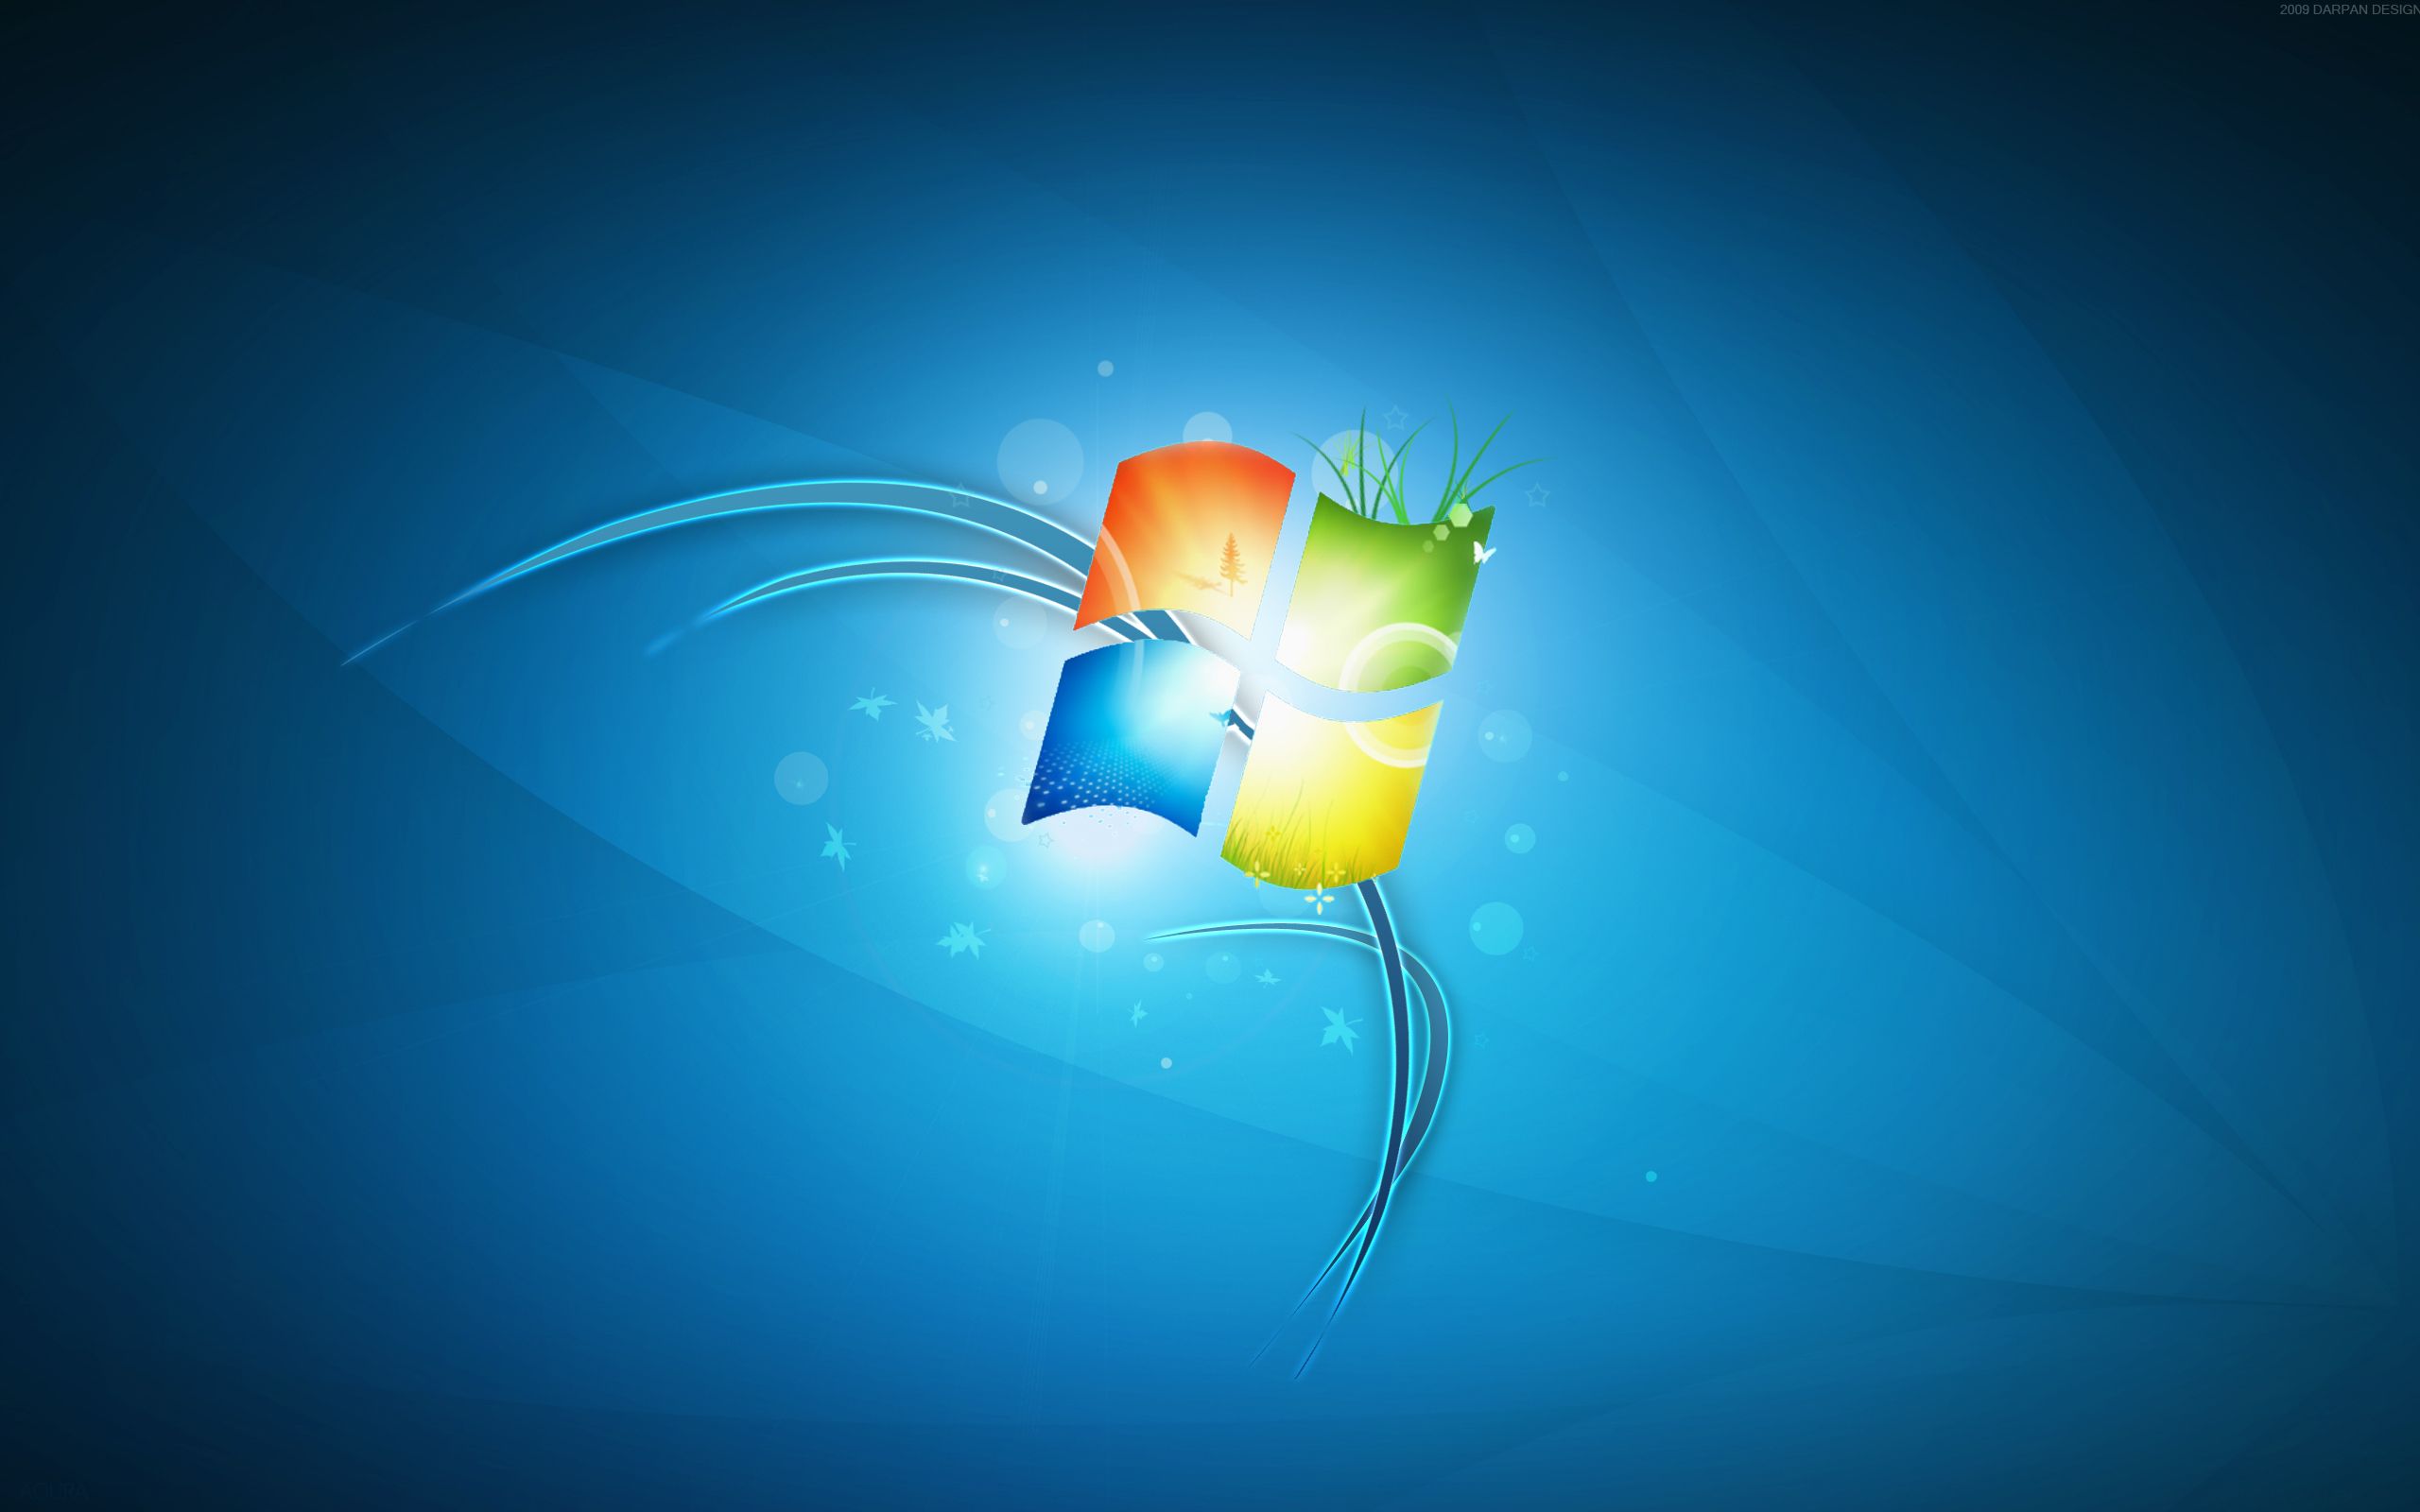 Microsoft Windows 7 Wallpaper Get Latest Backgrounds